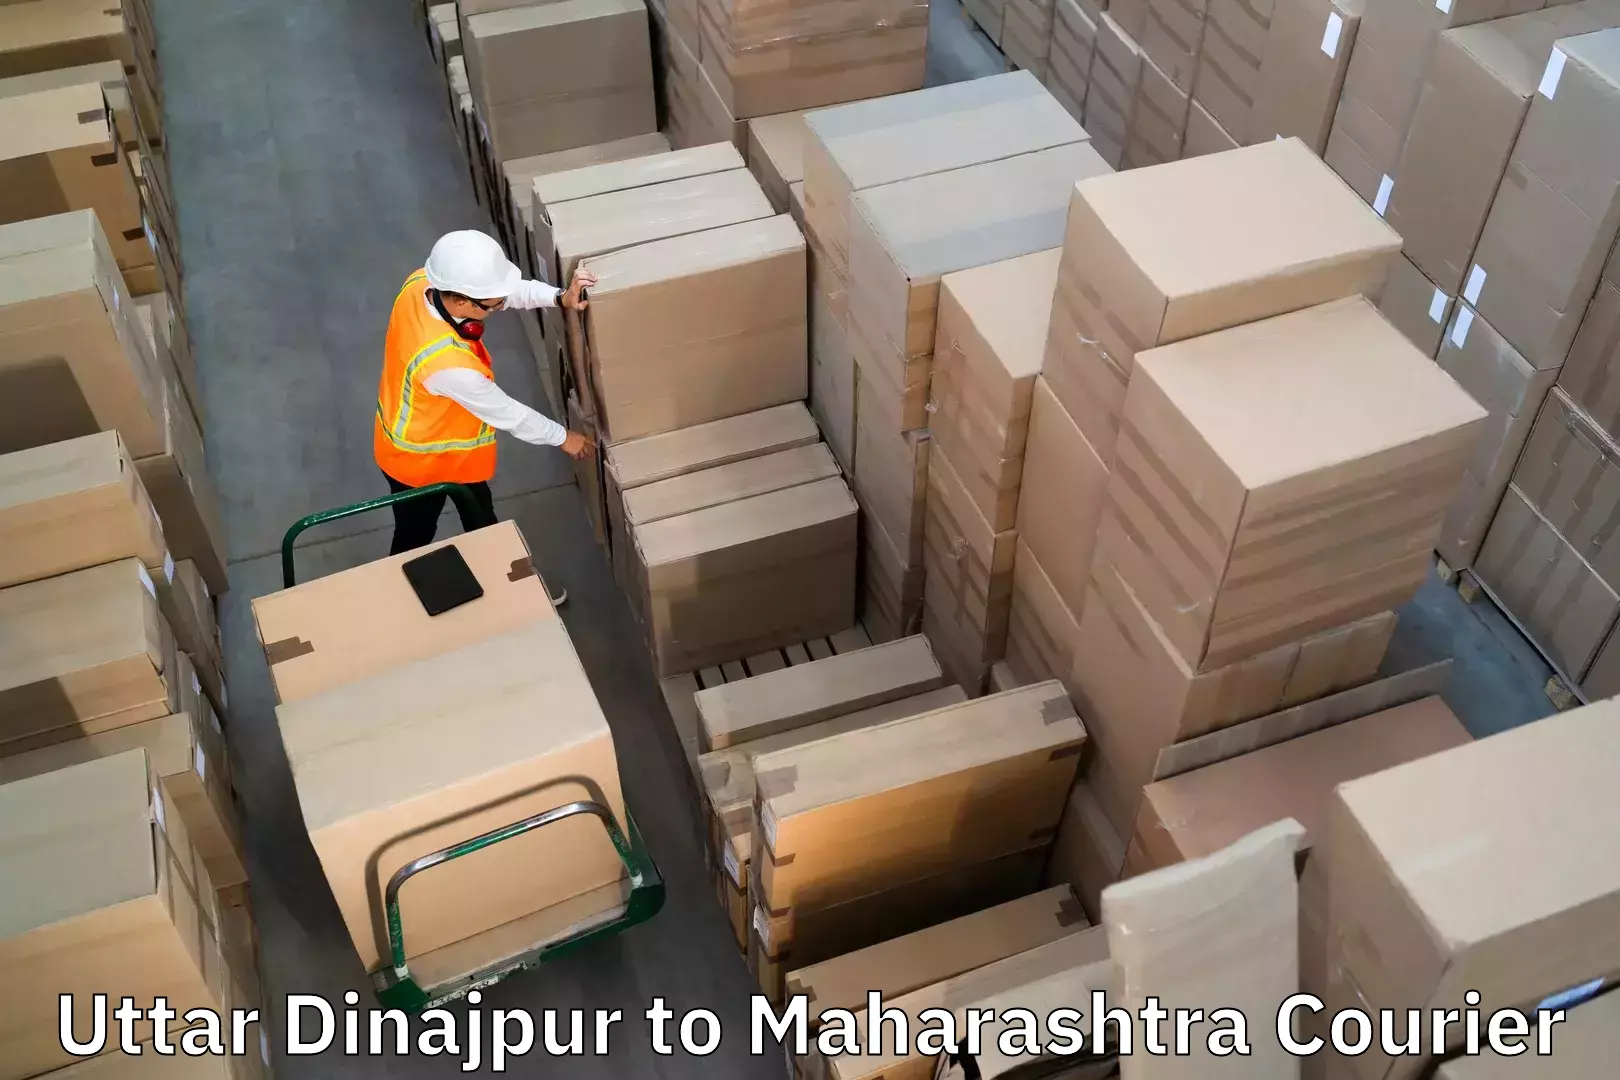 Baggage courier FAQs Uttar Dinajpur to Nagpur